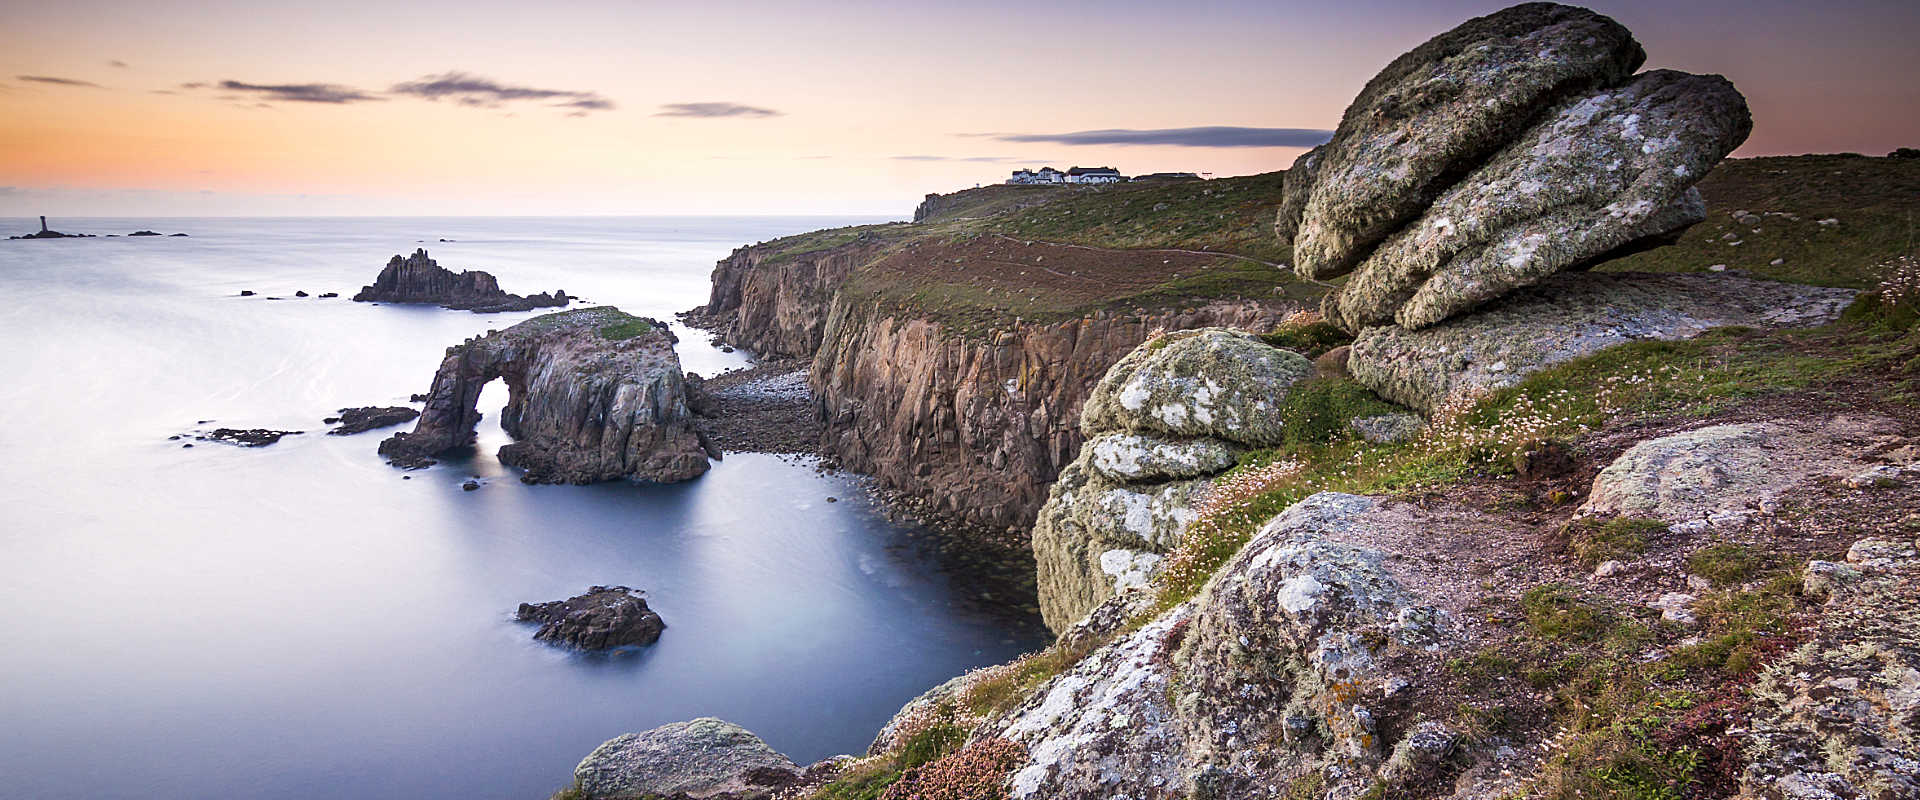 Fotoreise Cornwall - schöne Orte fotografieren